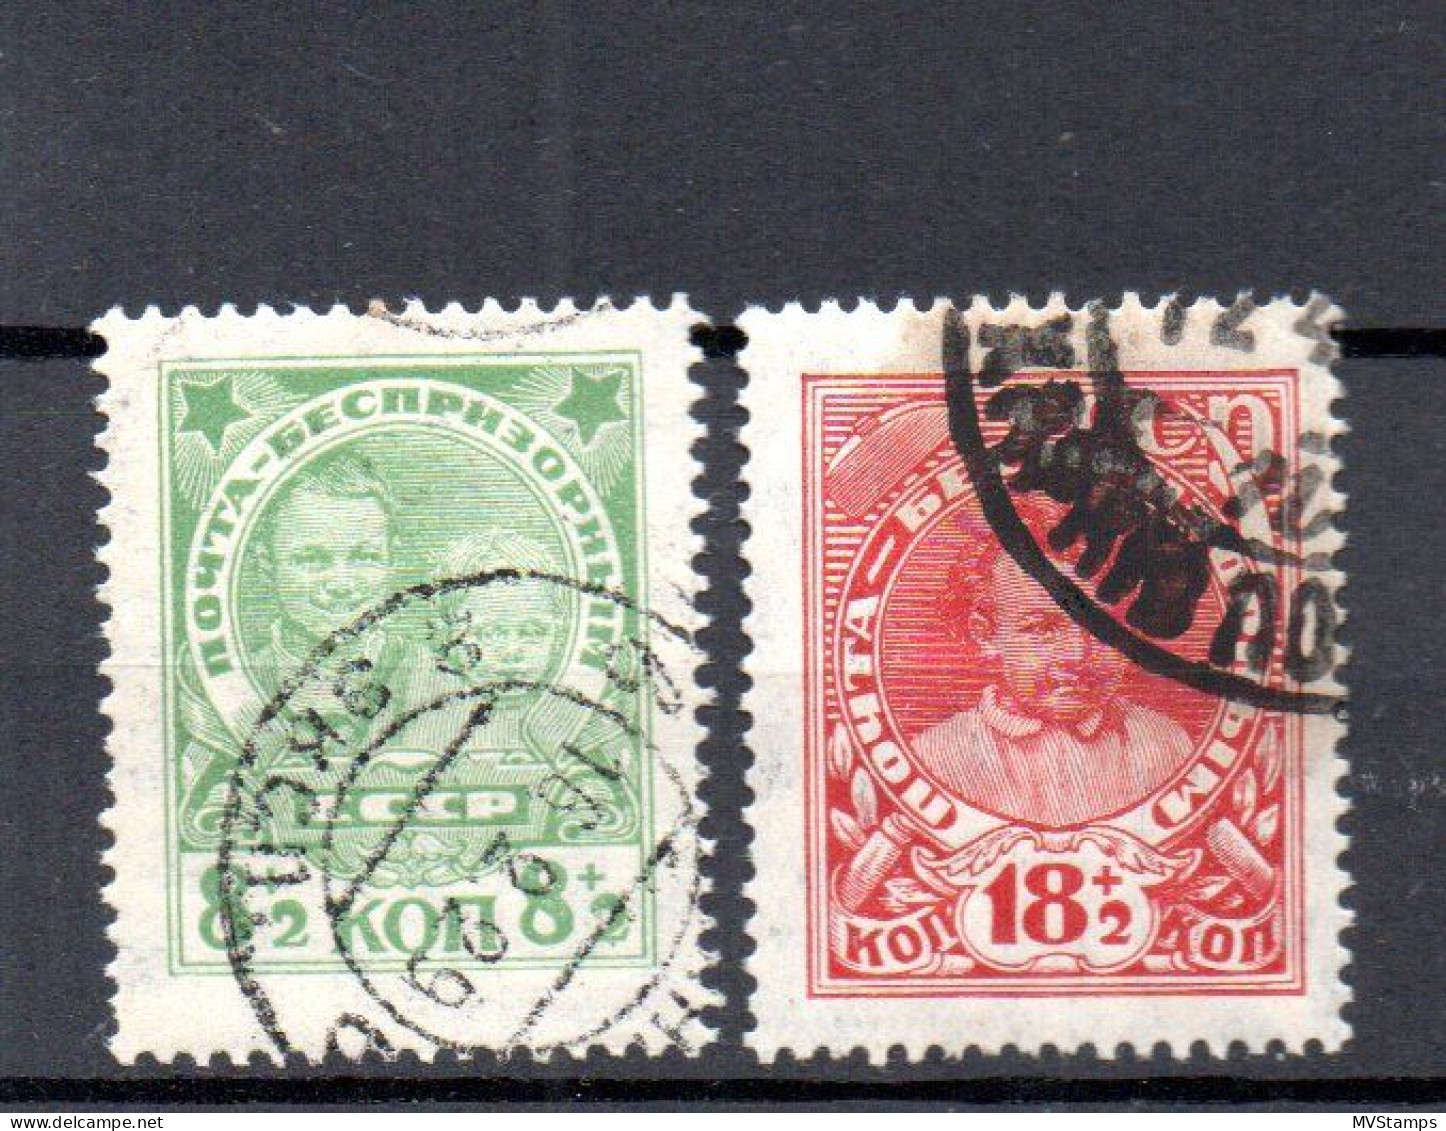 Russia 1927 Old Set Children Help Stamps (Michel 315/16) Nice Used - Gebraucht